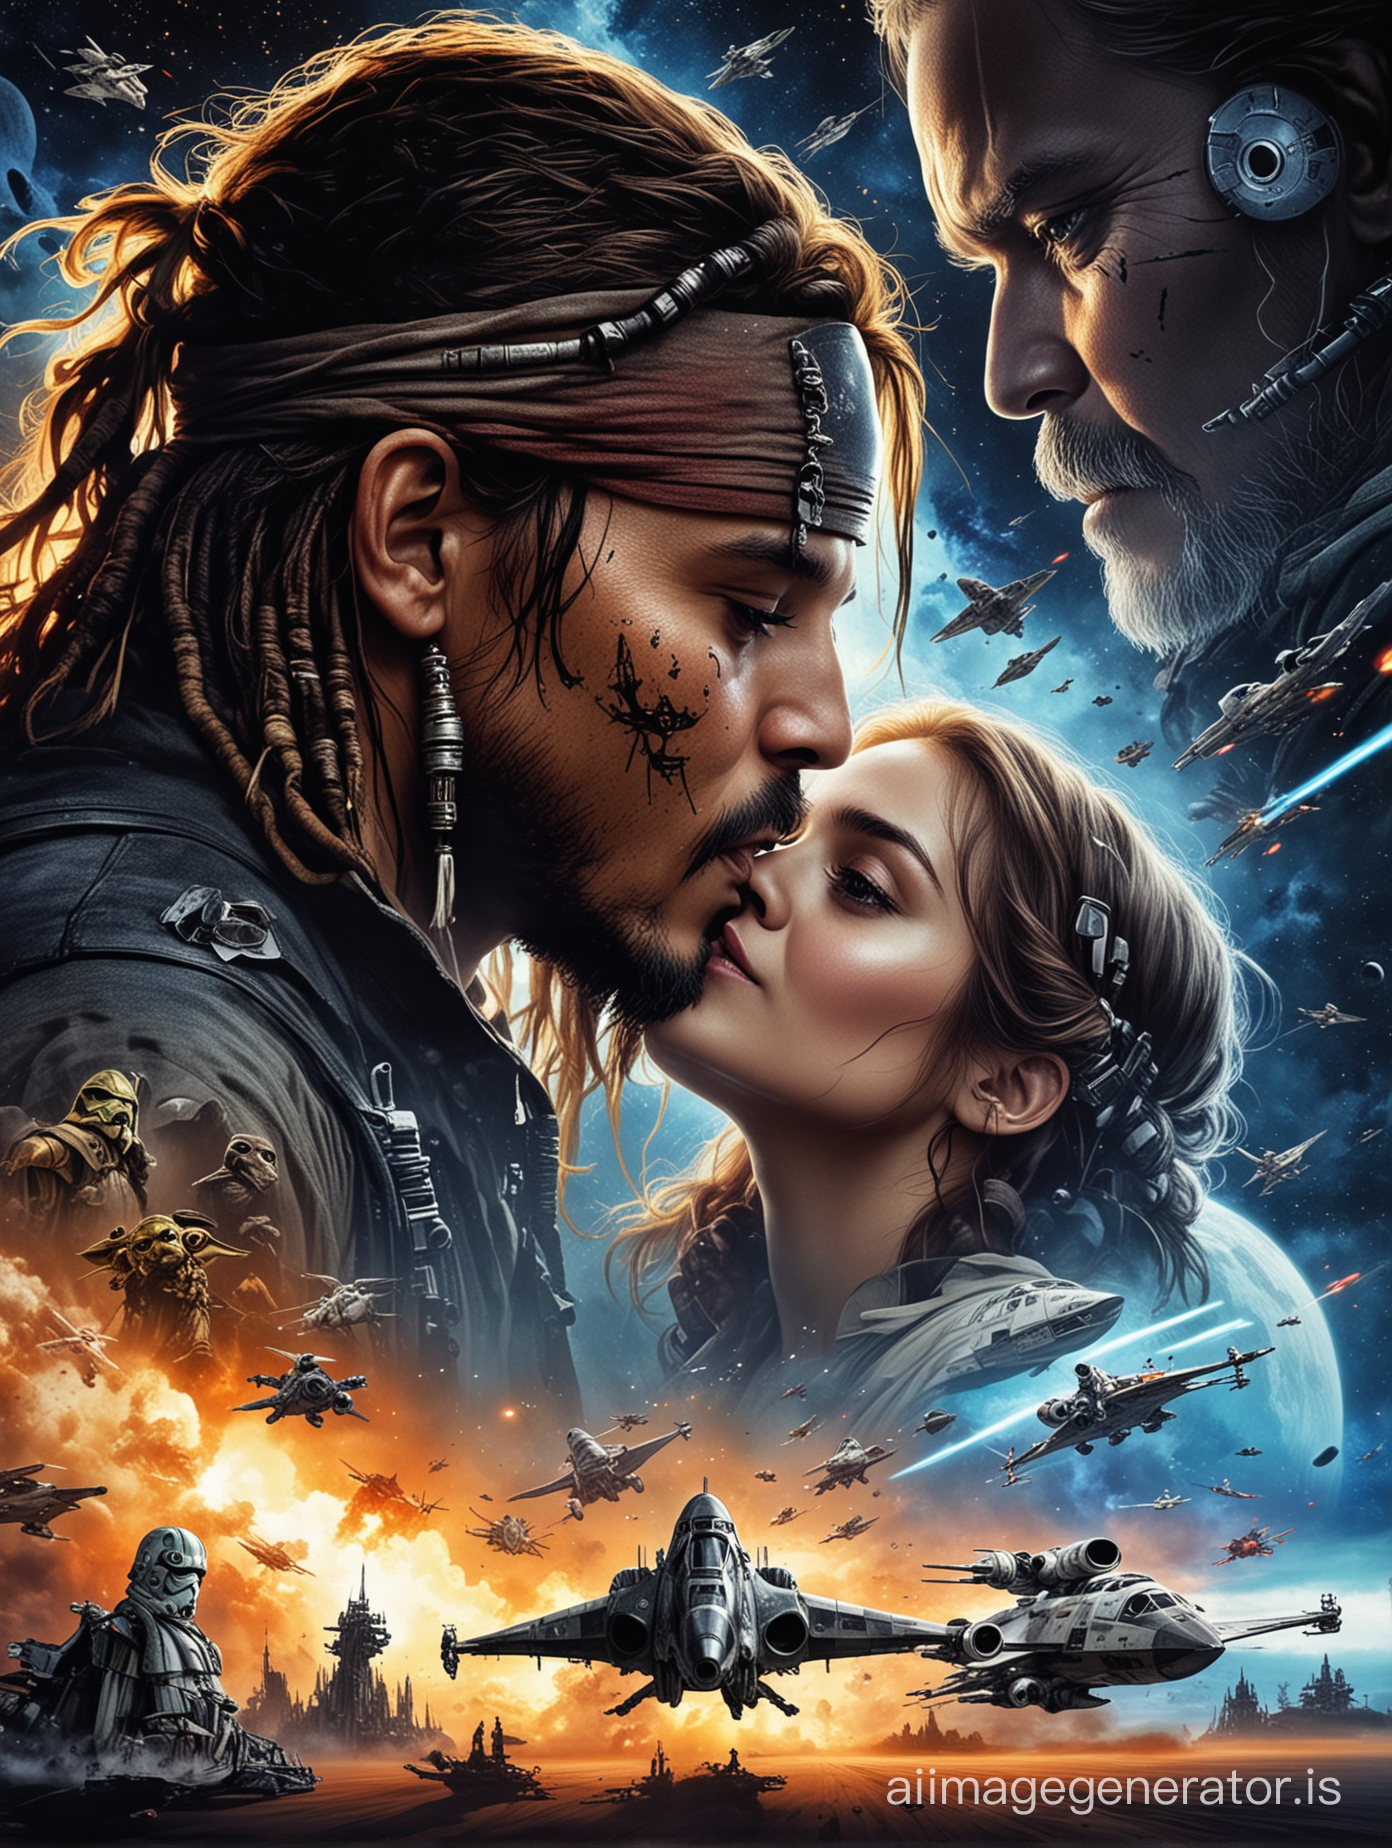 (Star Wars movie poster). Capitan Jack Sparrow kissing CP-3O. Background Star Wars space ship battle, Death-Star, Yoda, Darth Vader, Millennium Falcon